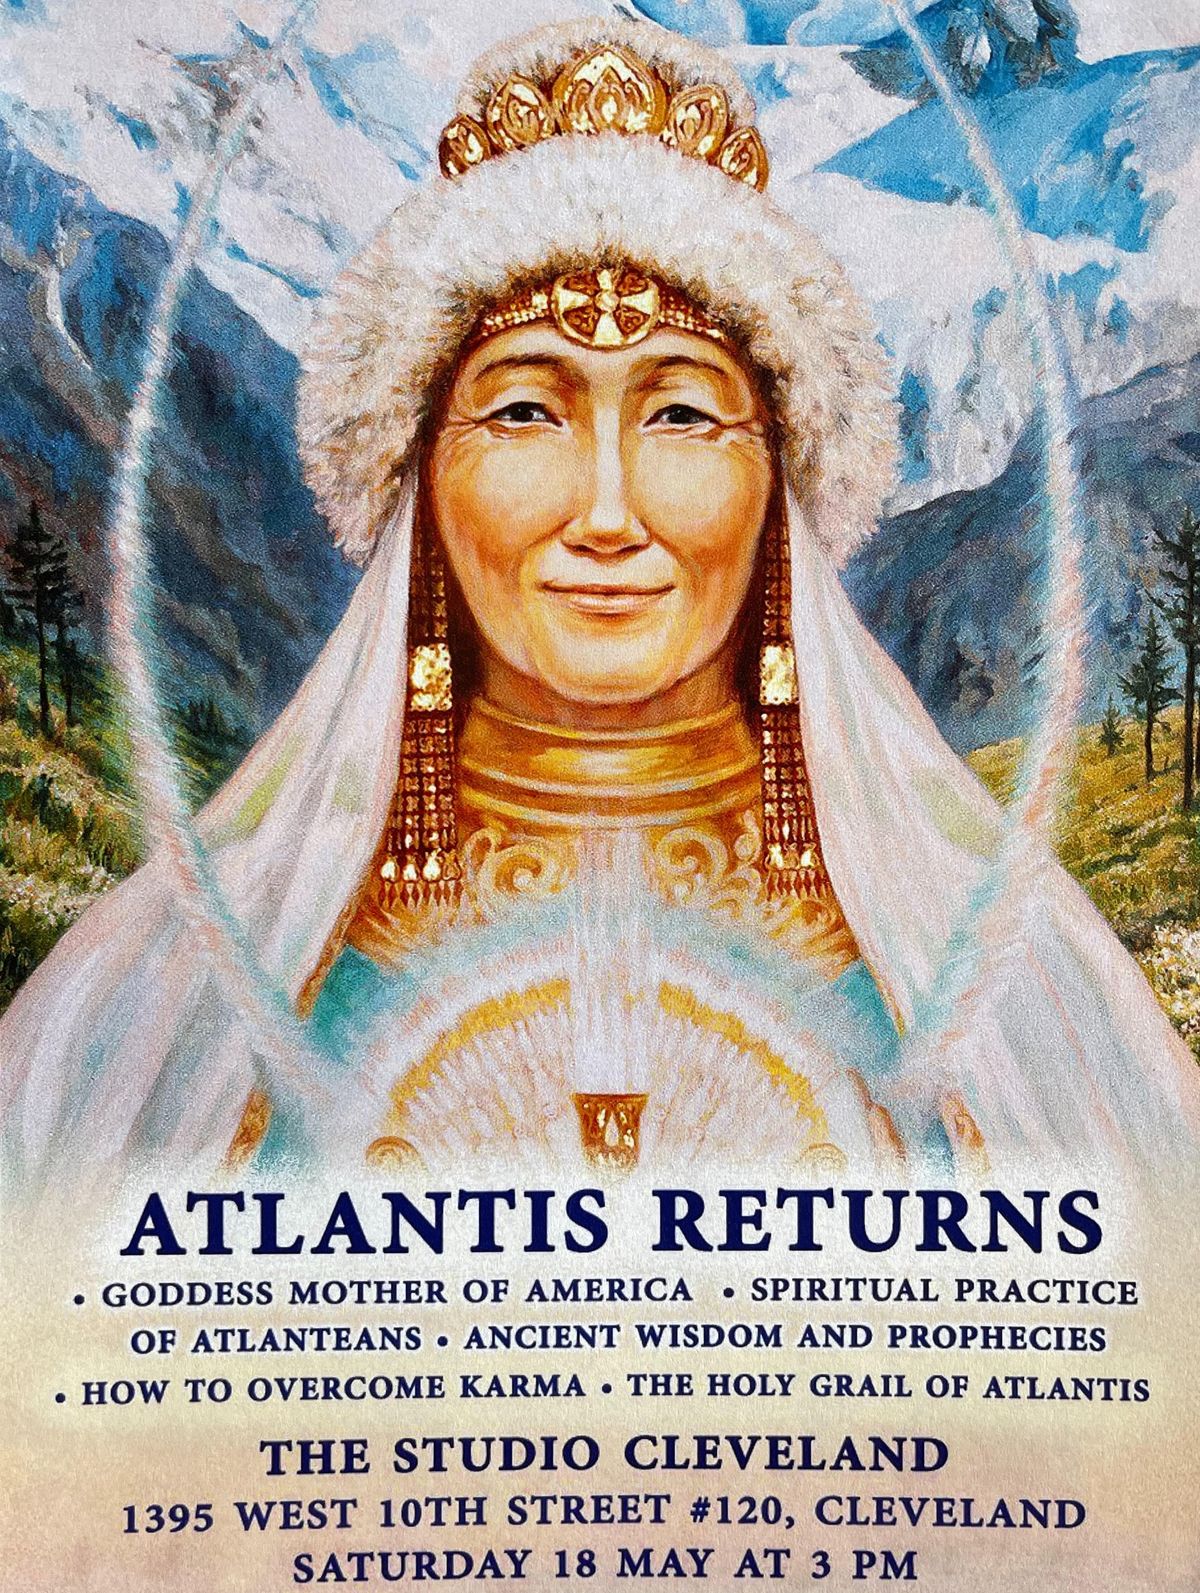 Atlantis Returns - A Cathars Event